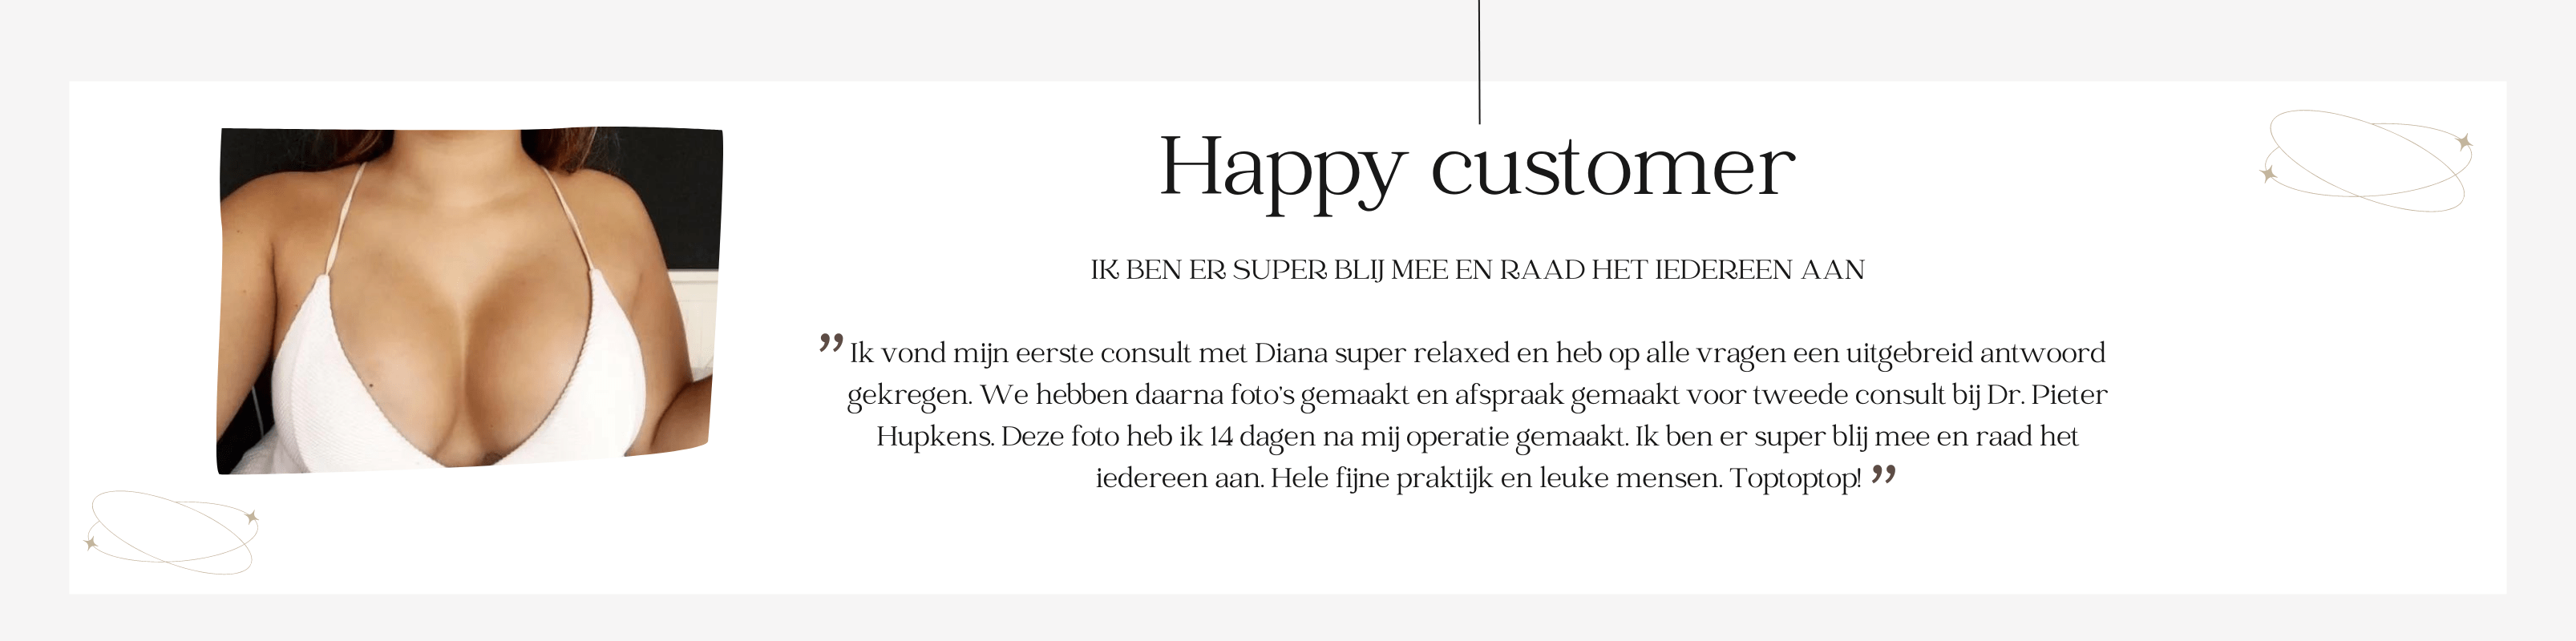 Happy customers borsten 5